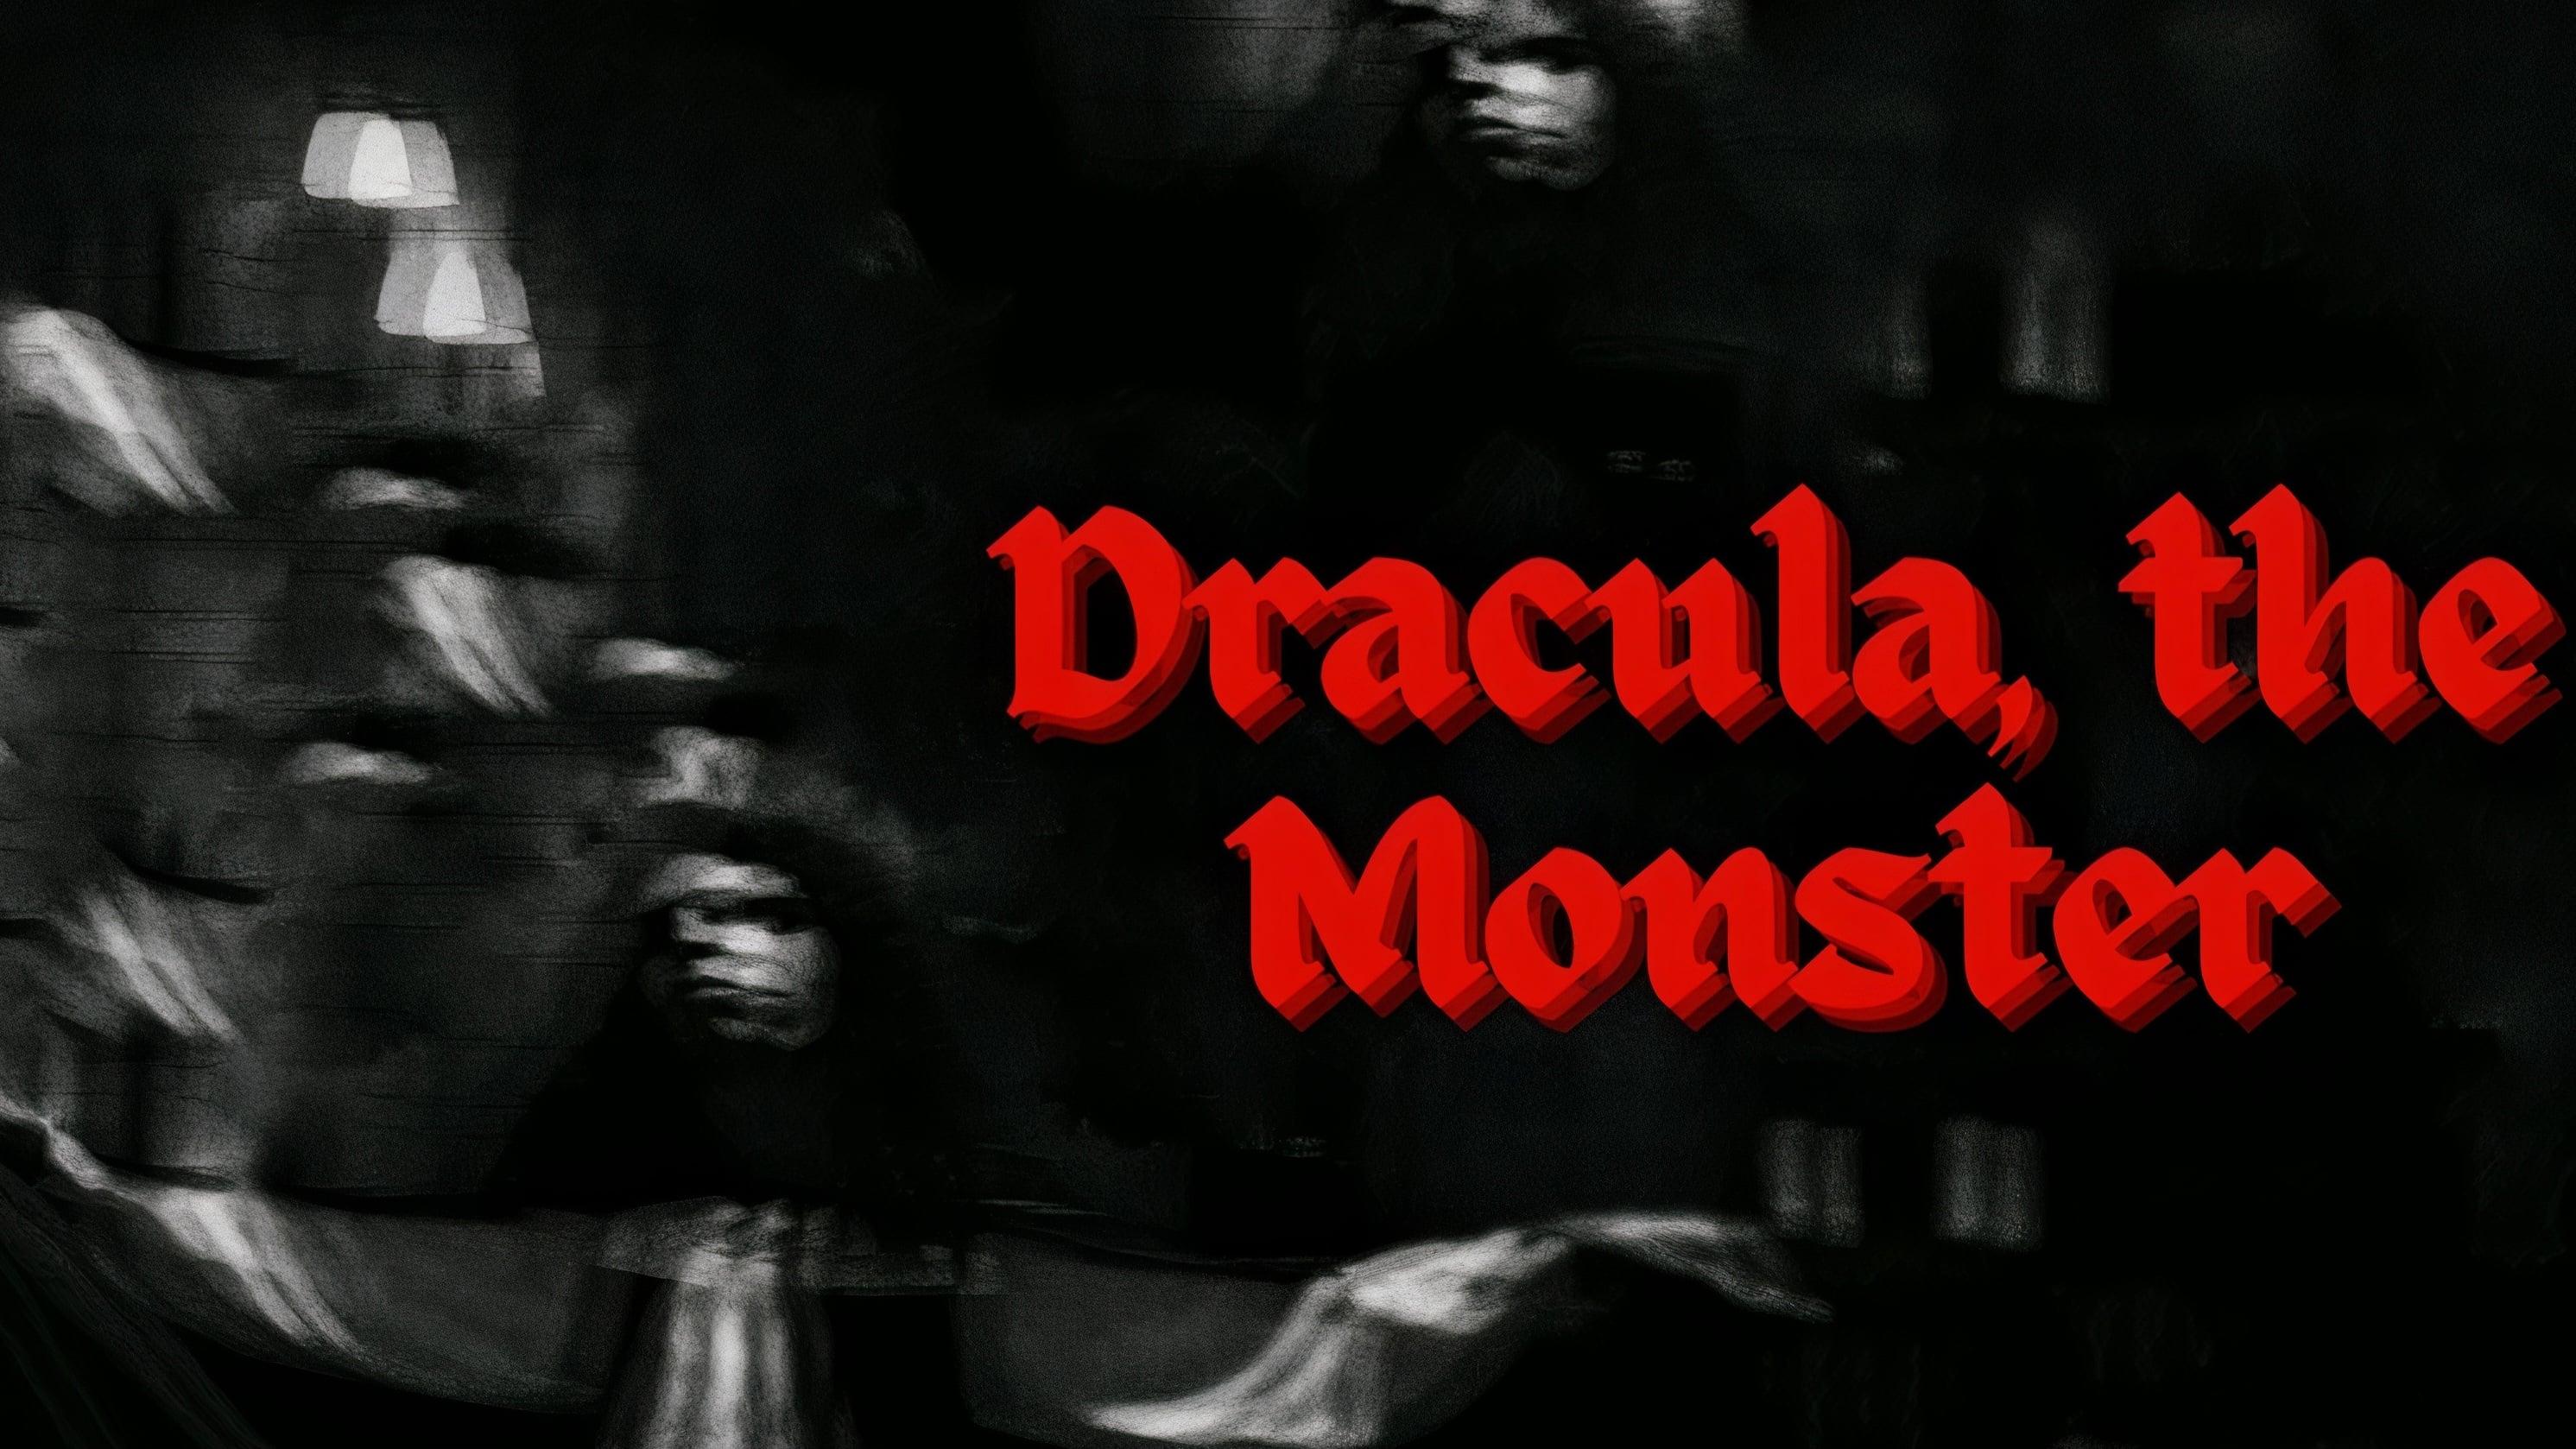 Dracula, The Monster backdrop